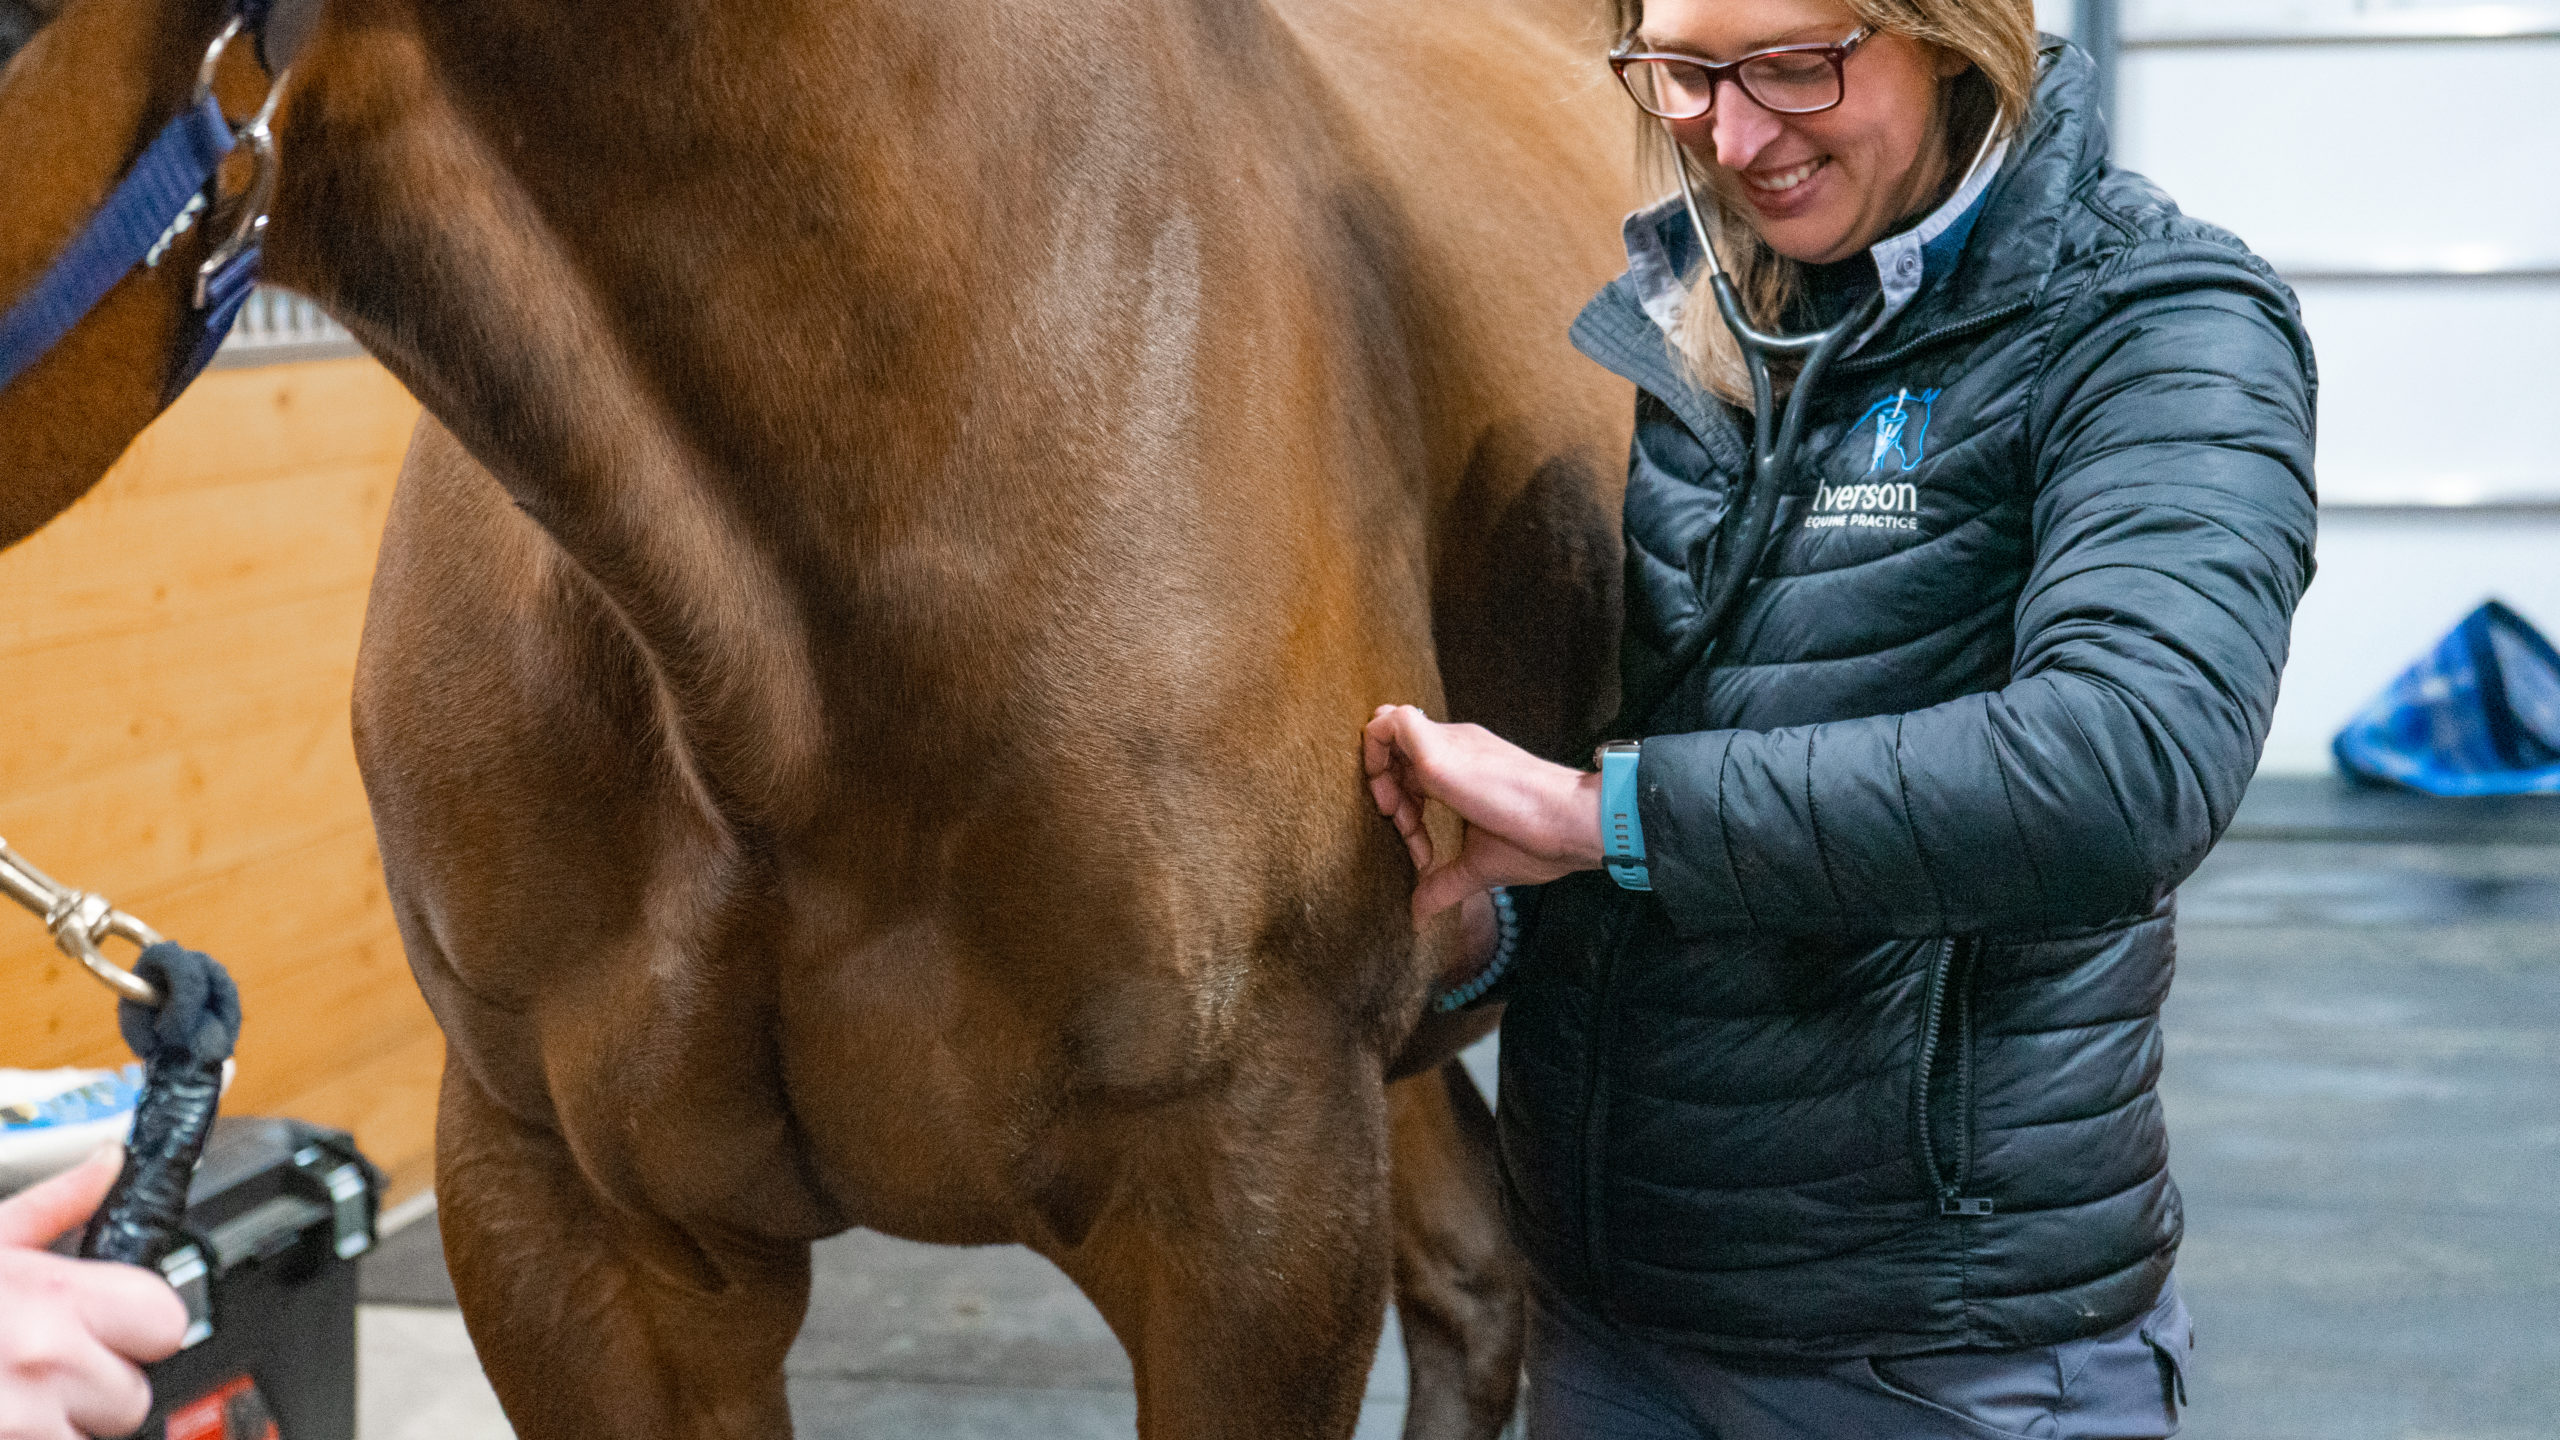 Dr. Iverson providing checking a horse's heart